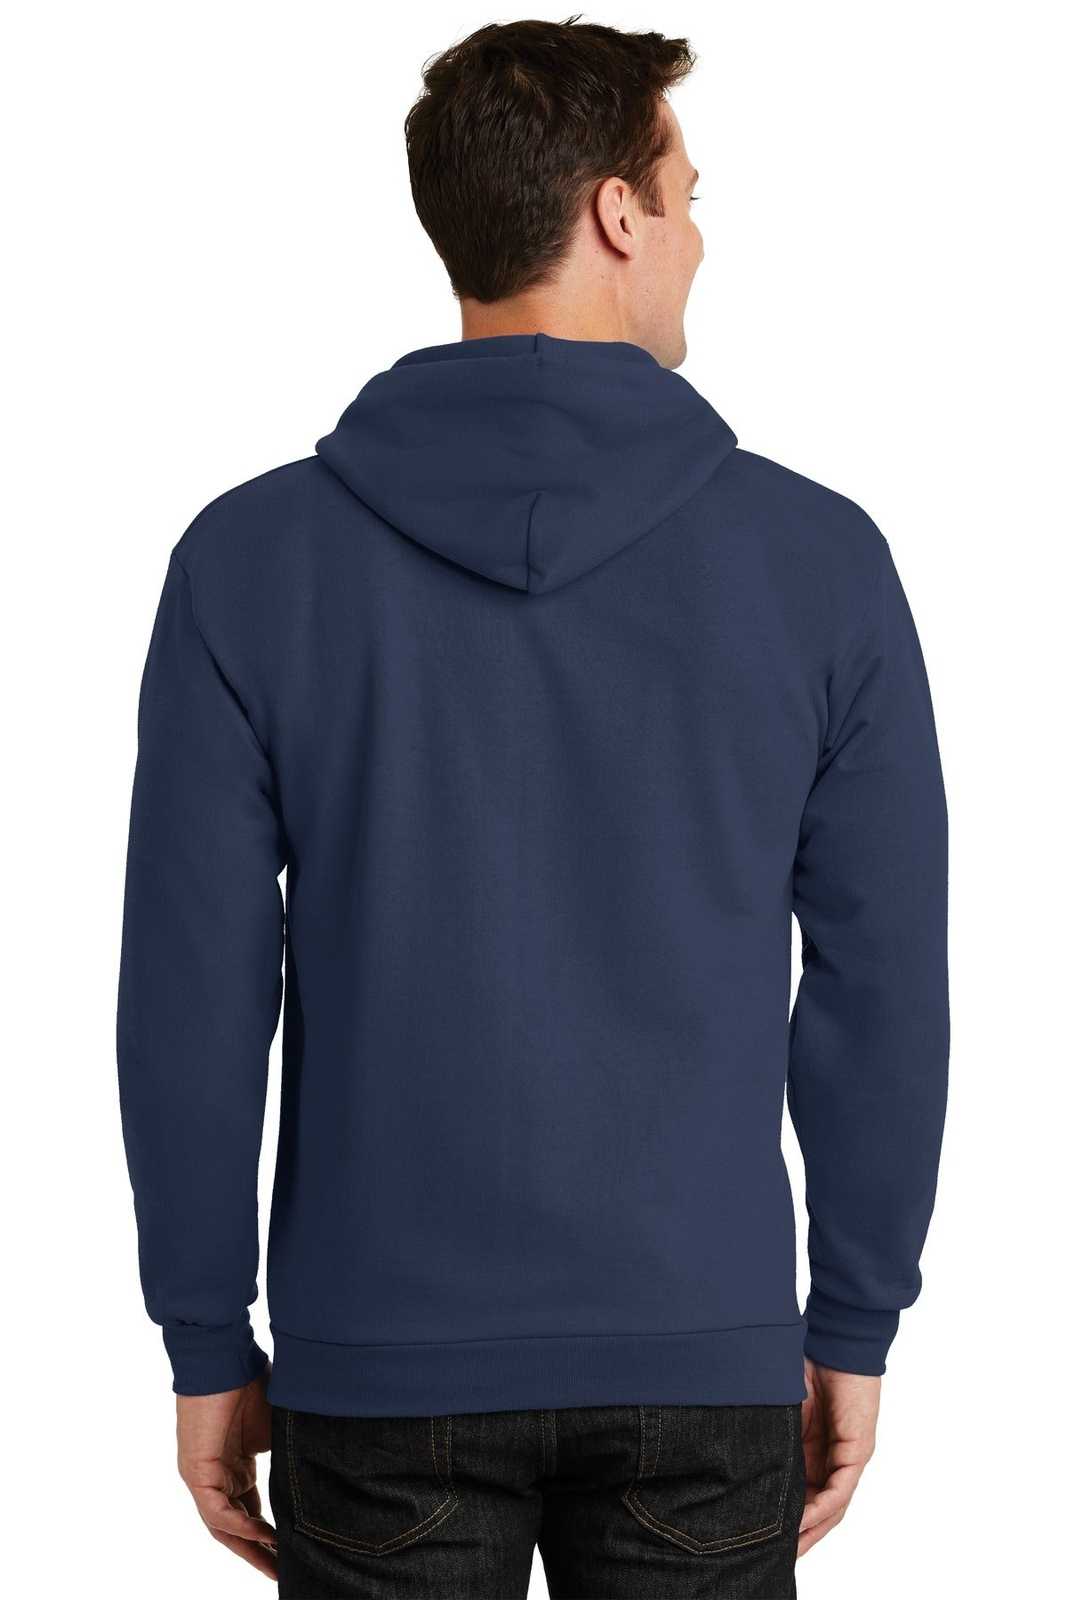 Port & Company PC90ZH Essential Fleece Full-Zip Hooded Sweatshirt - Navy - HIT a Double - 1